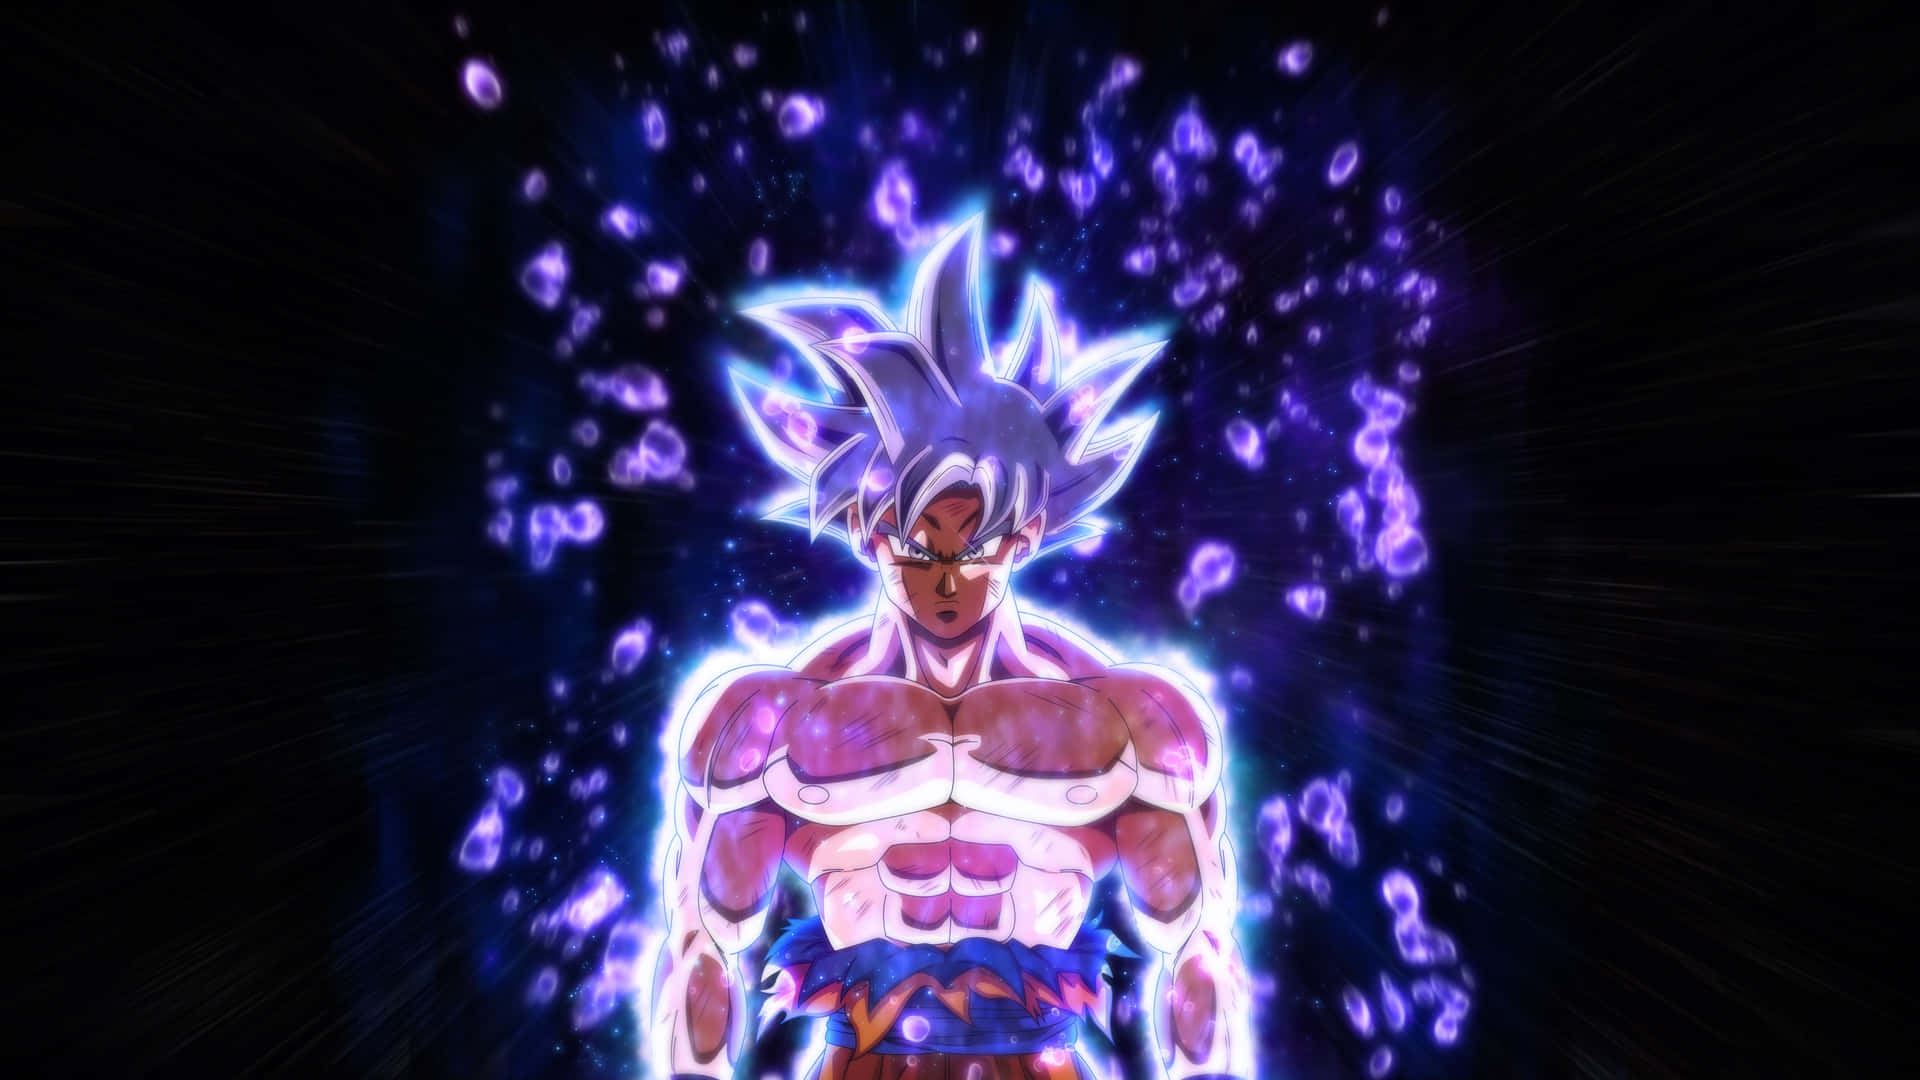 Unleashing His Power! Goku in Ultra Instinct